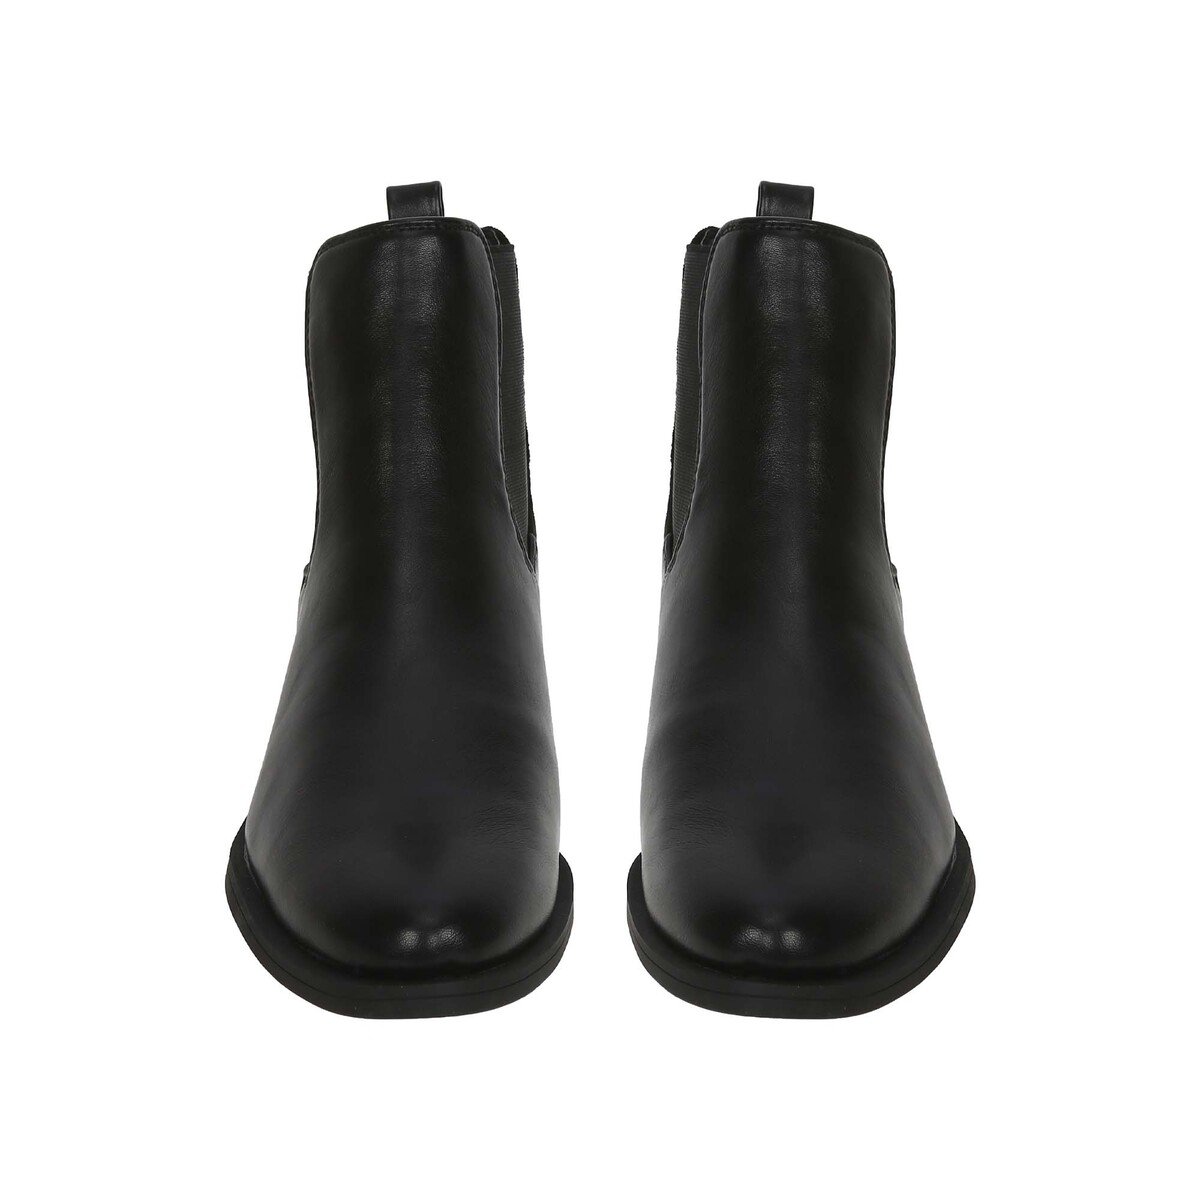 Eten Women's Fashion Boots B8058-2 Black, 36